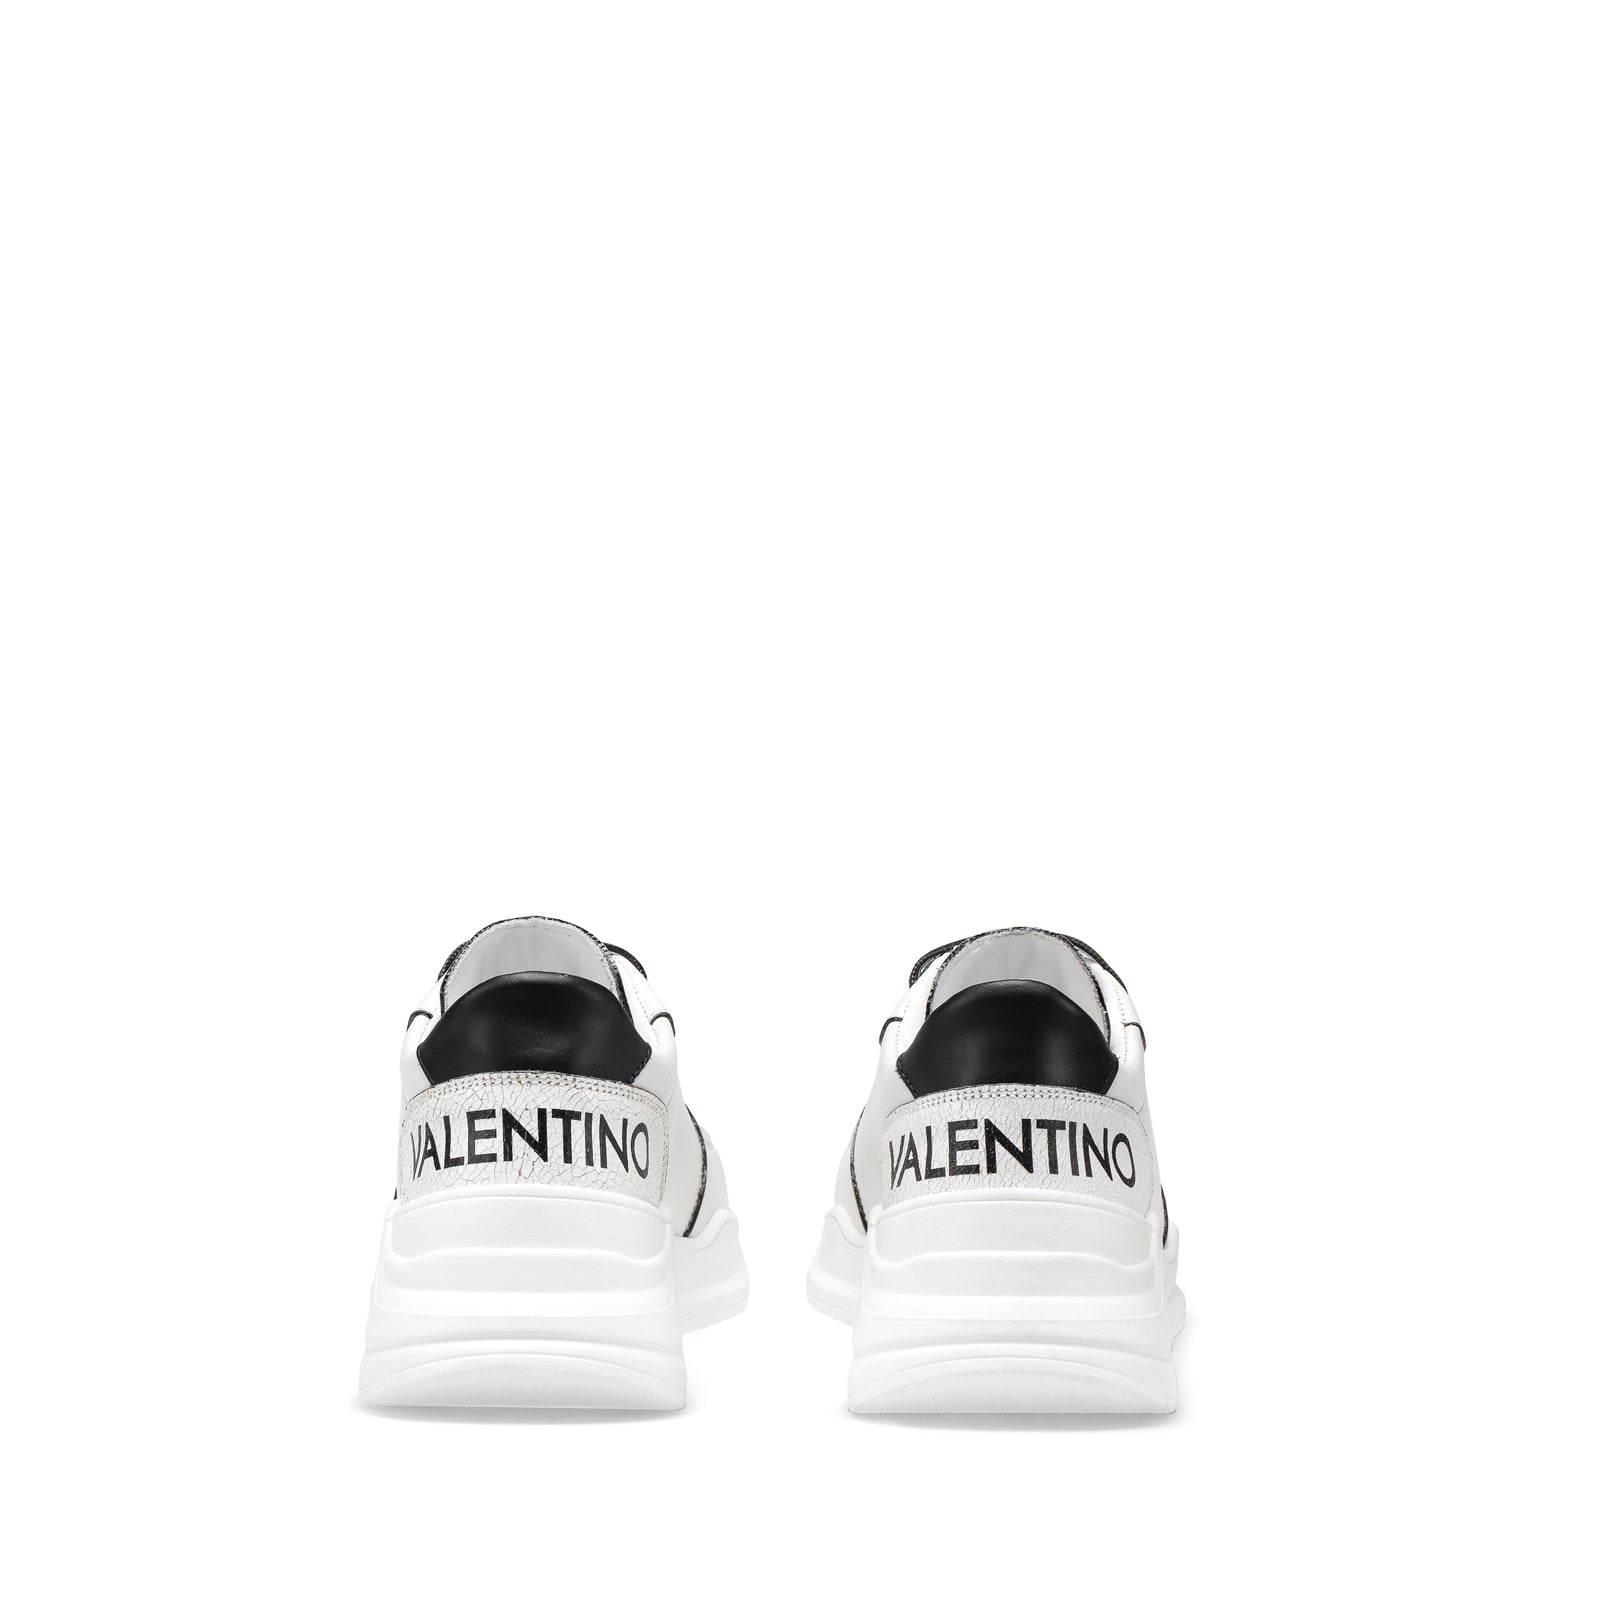 Valentino Garavani Fashion Sneakers for Men | Mercari